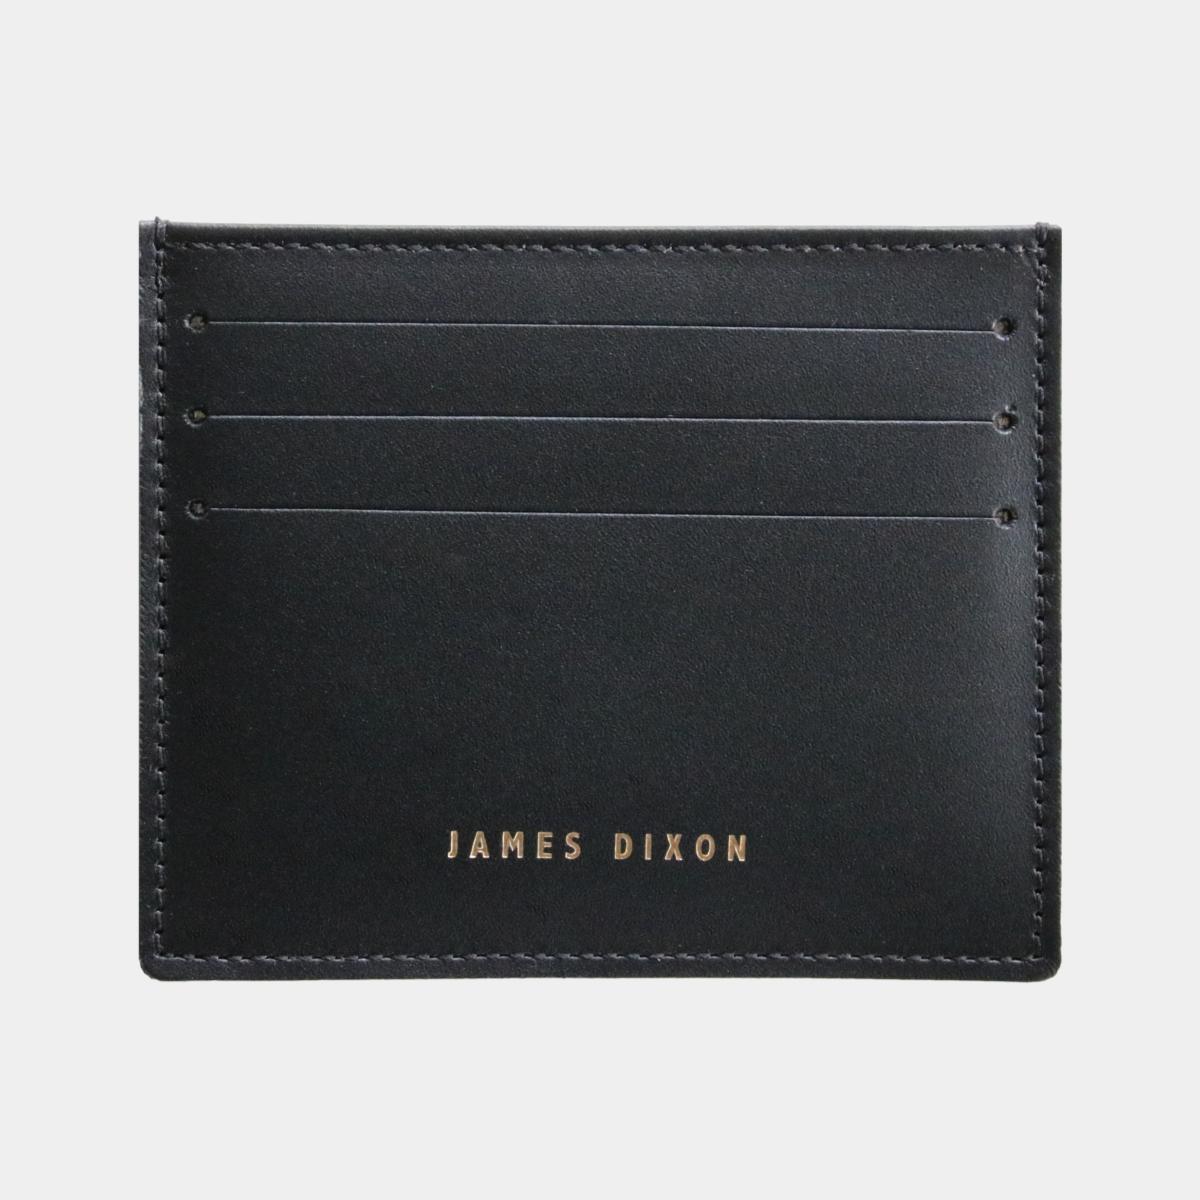 jd0325 james dixon poco one black wallet front